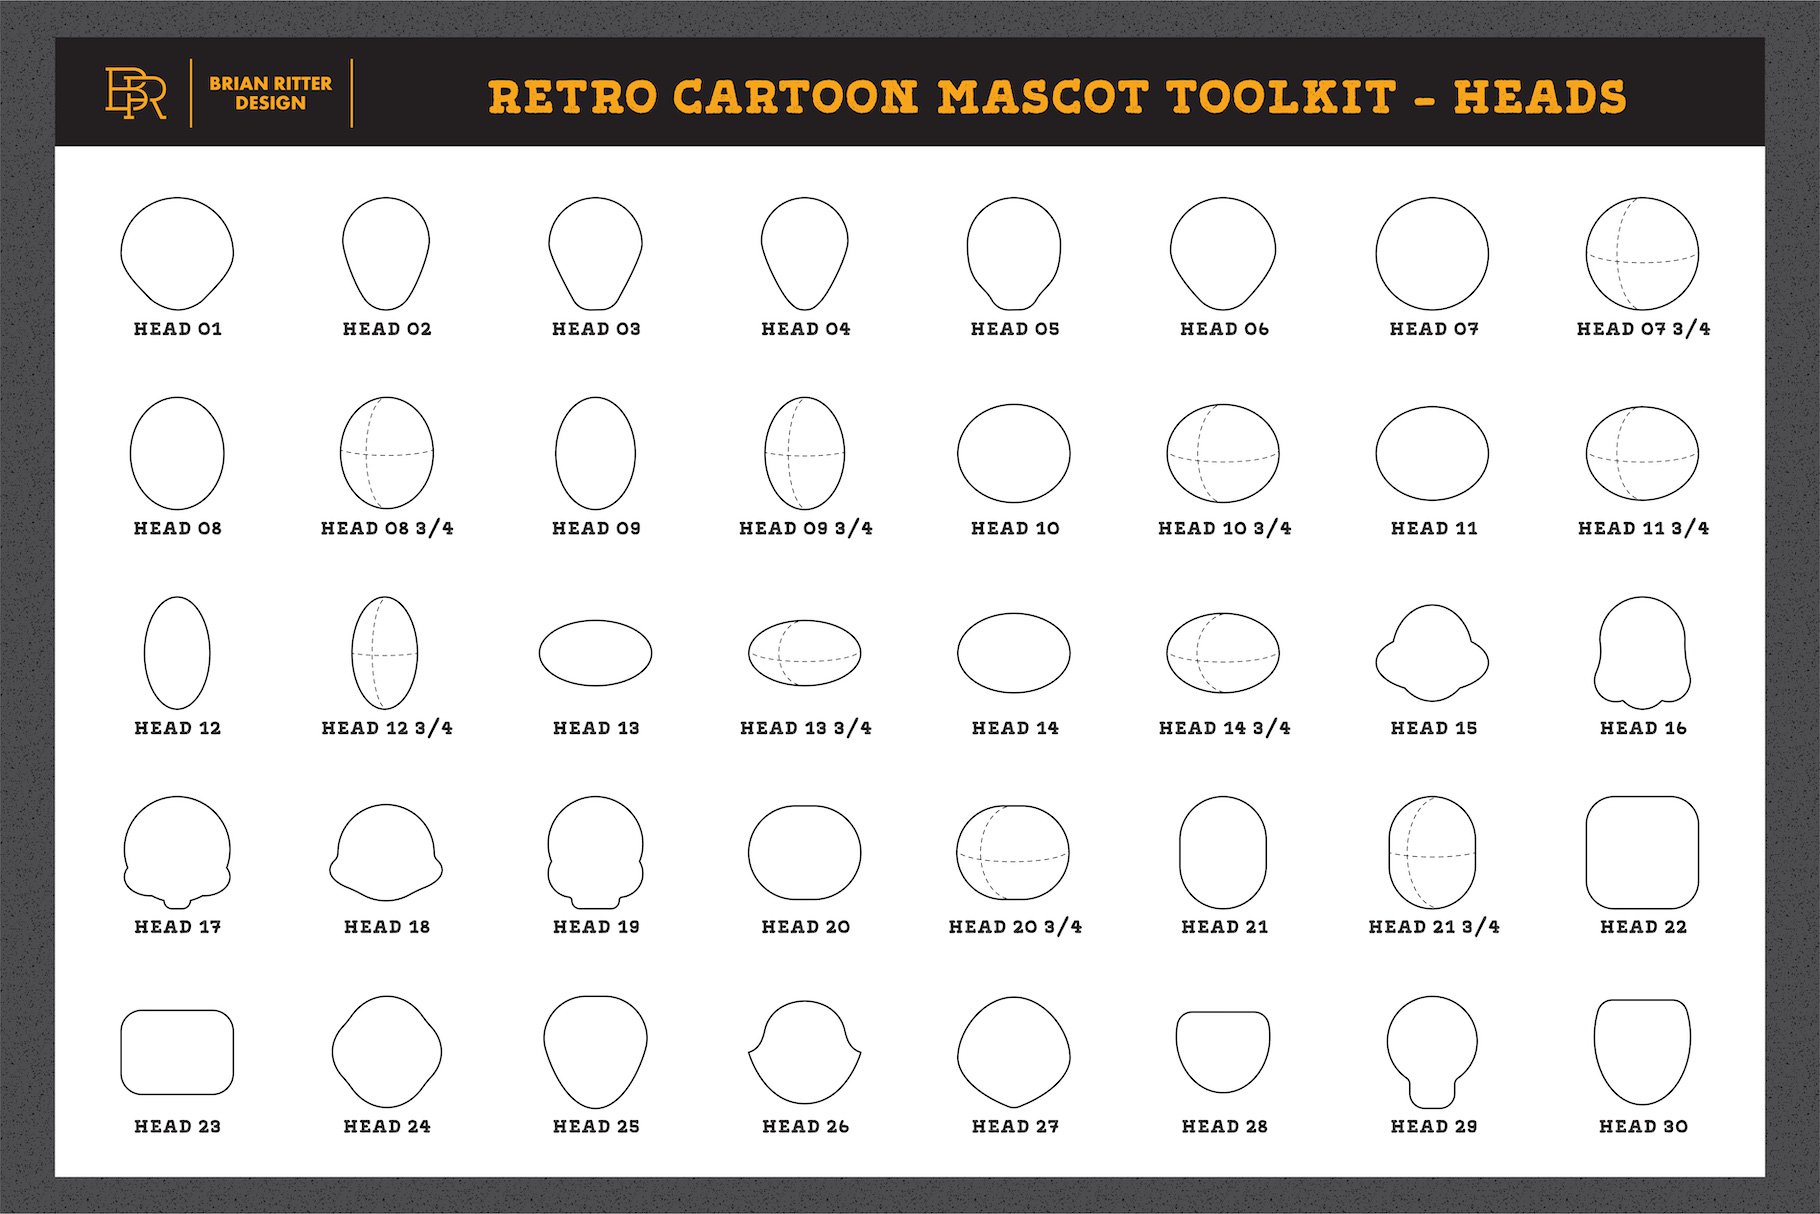 Retro cartoon mascot toolkit - heads.